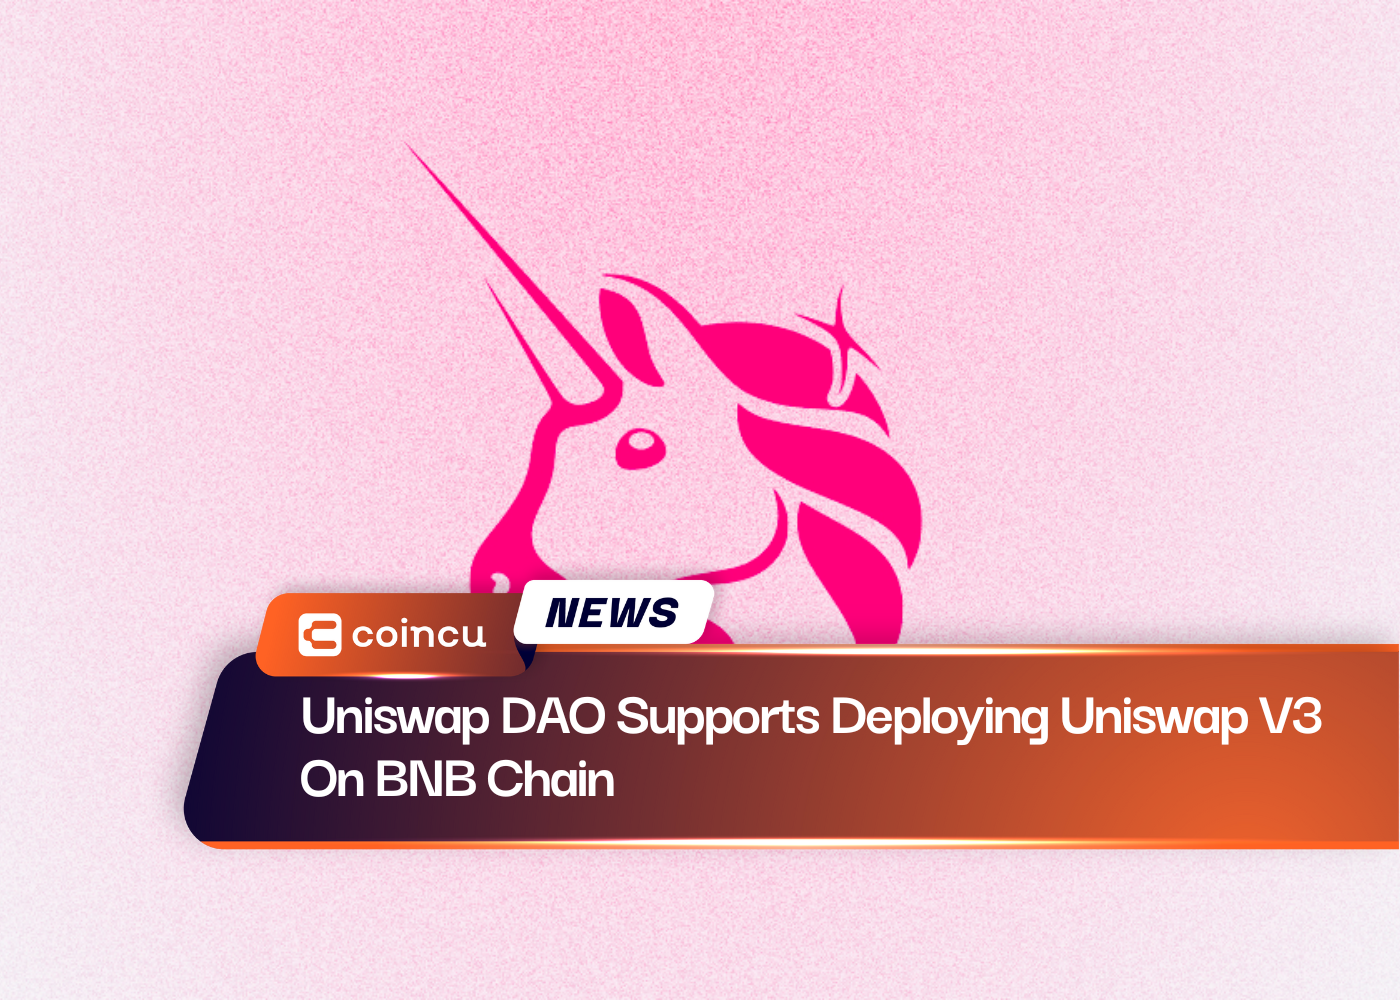 Uniswap DAO Supports Deploying Uniswap V3 On BNB Chain